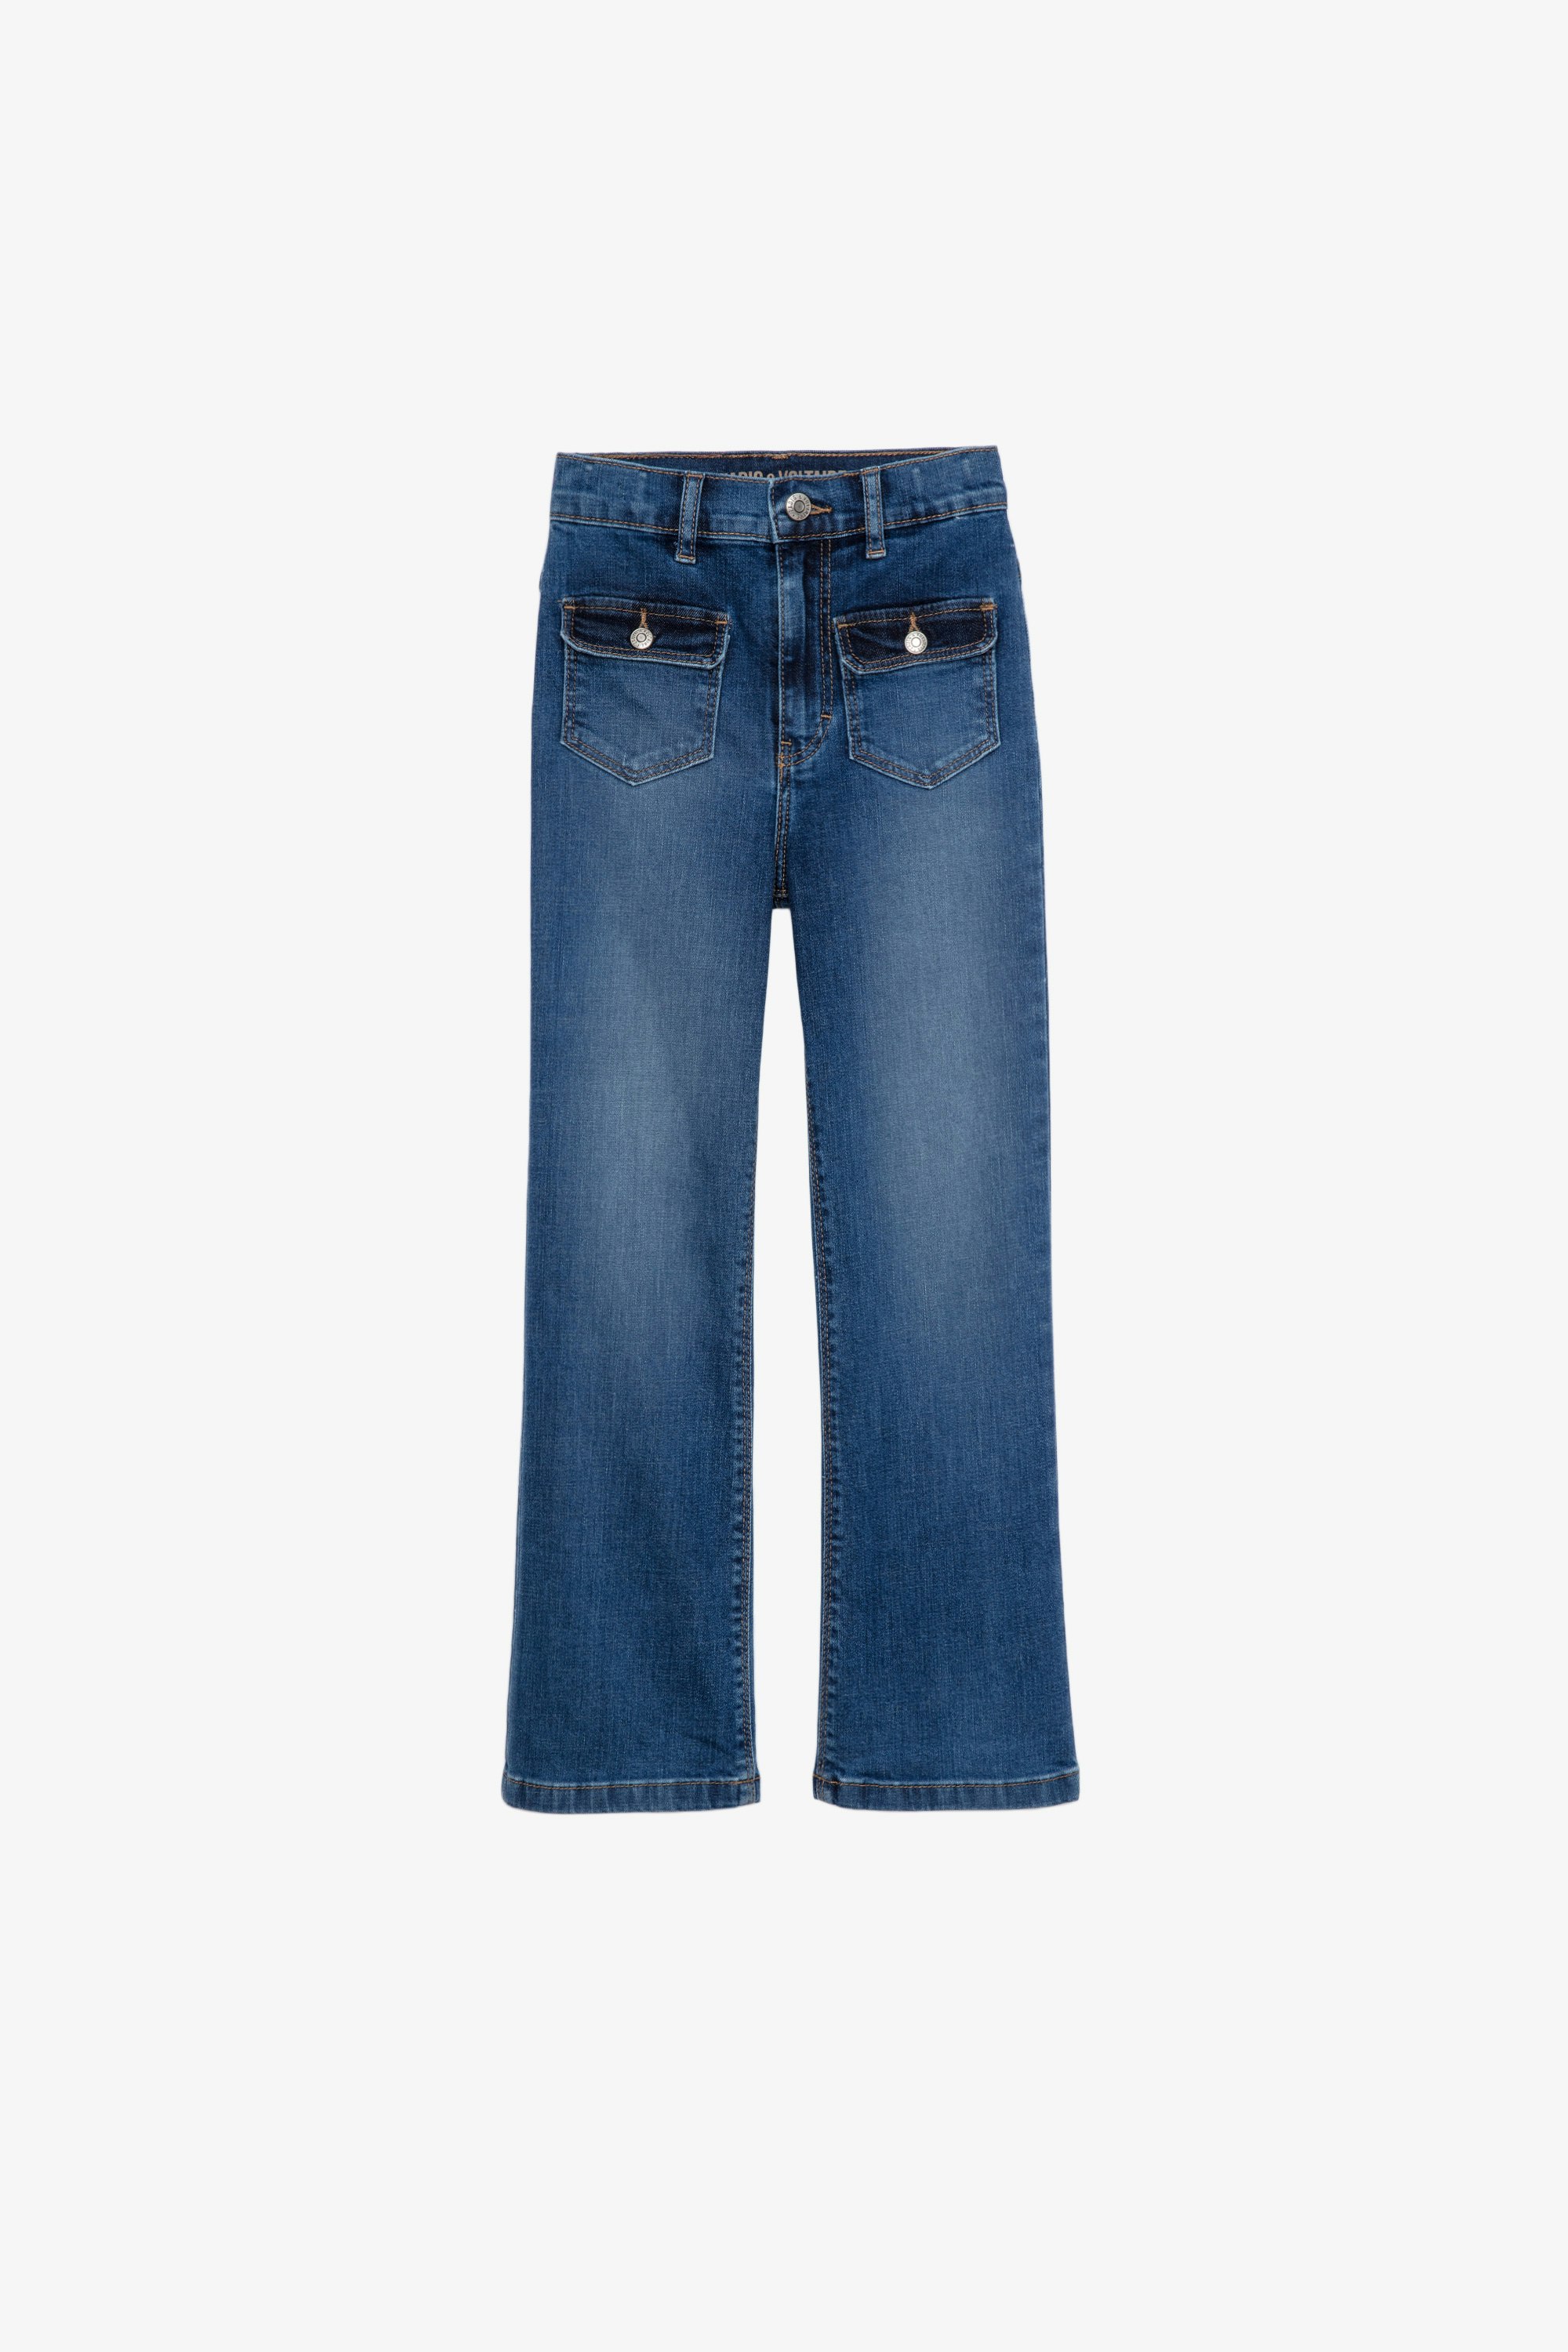 Hippie Kids’ Jeans Children’s blue faded denim flared jeans 